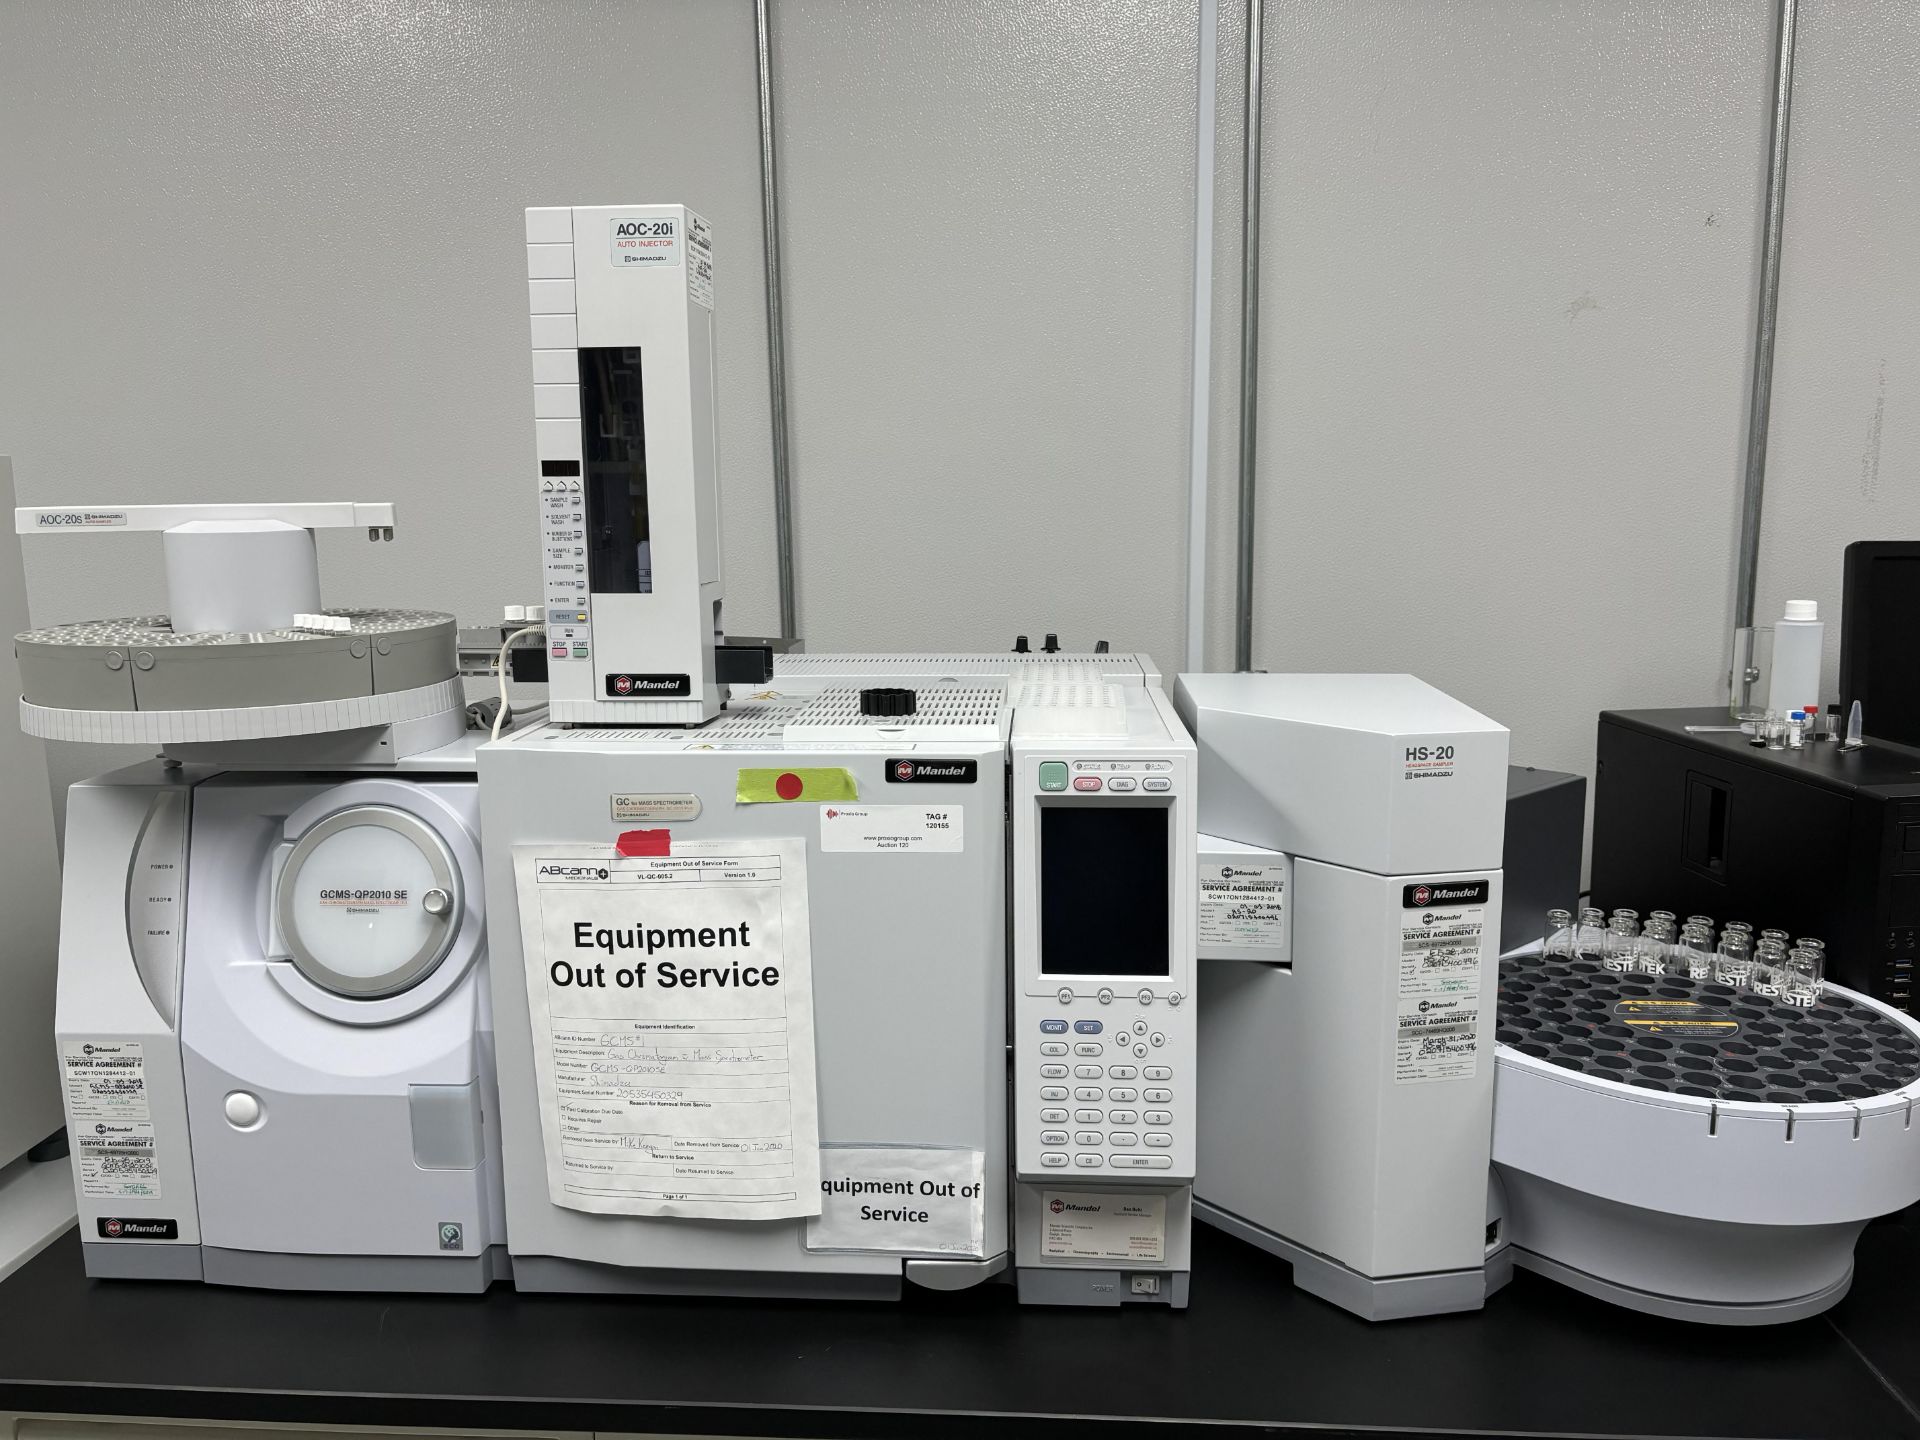 Shimadzu Gas Chromatograph - Mass Spectrometer Model GCMS QP2010SE